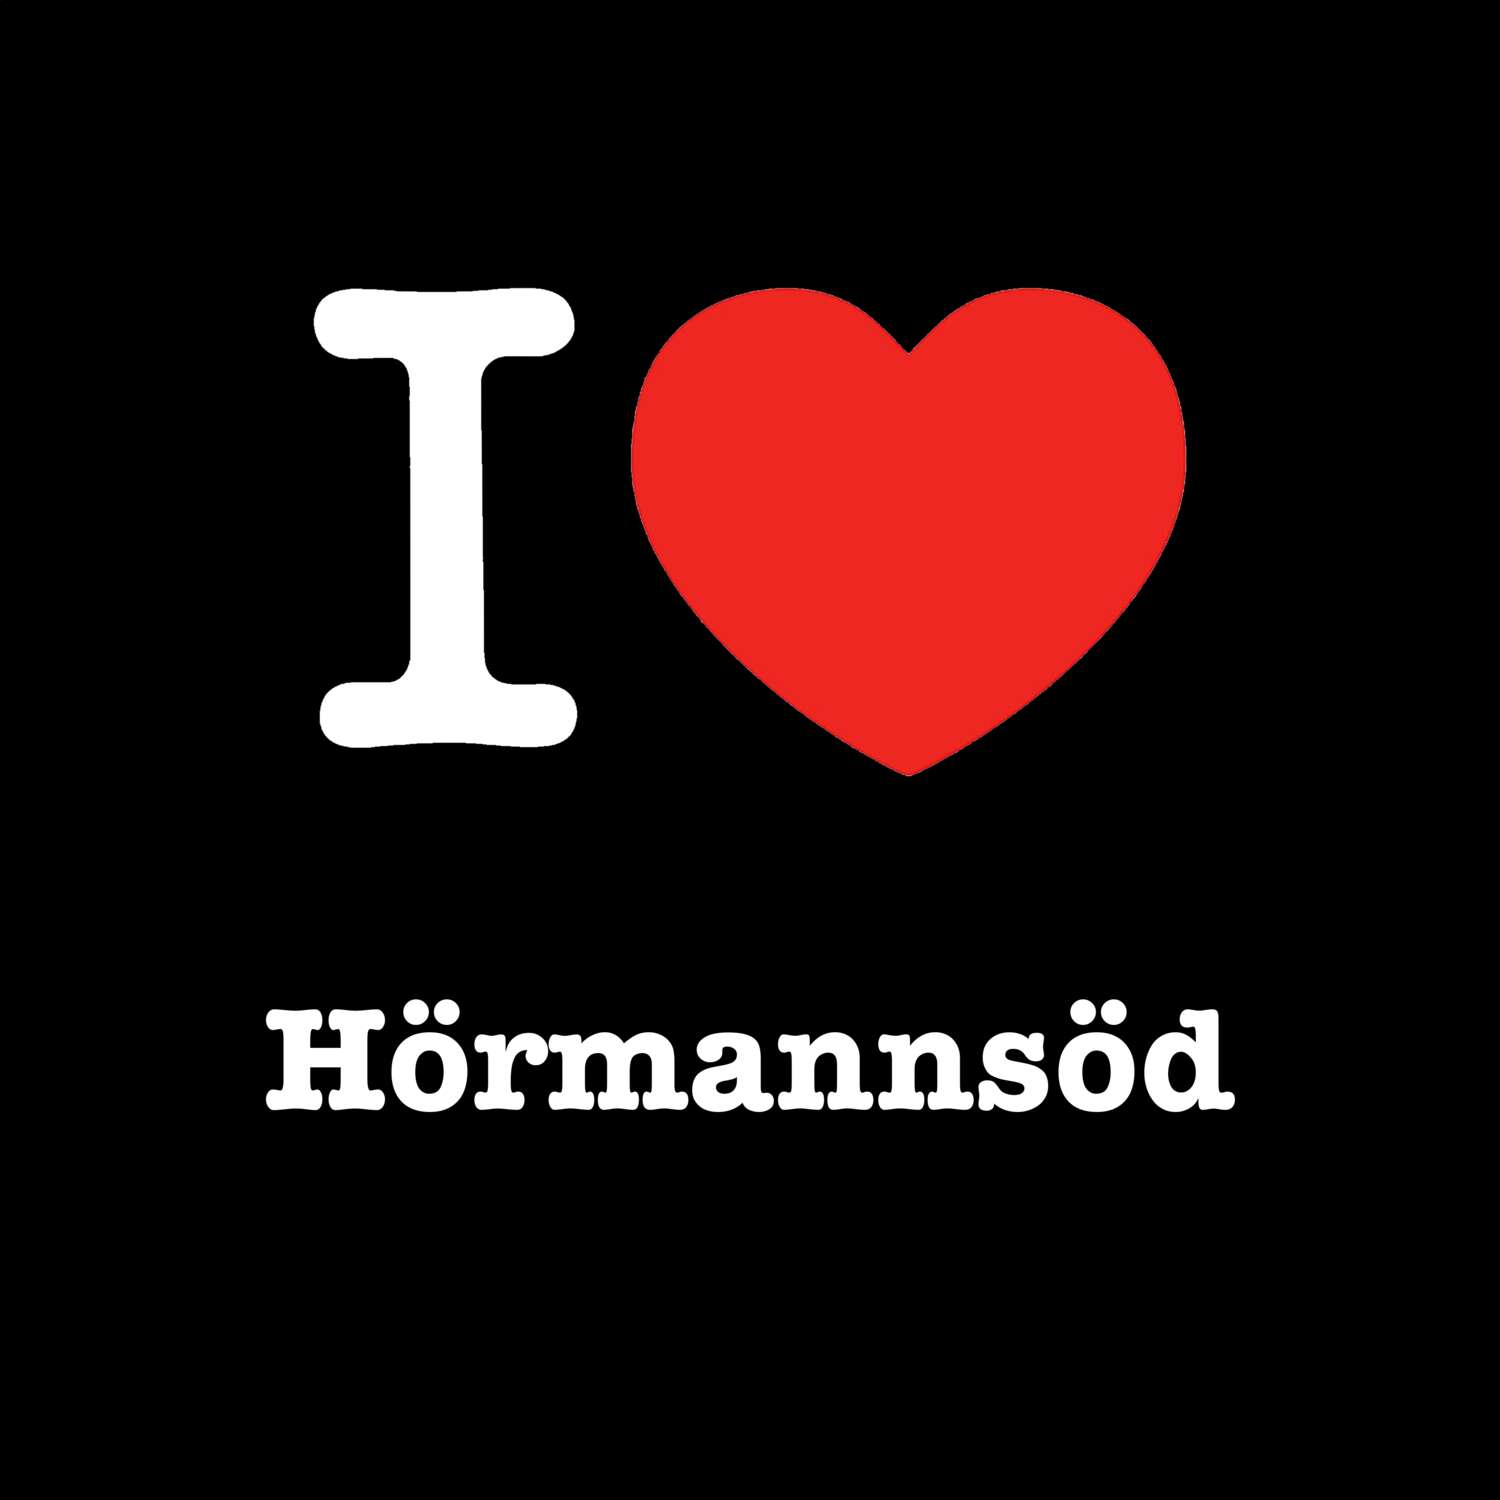 Hörmannsöd T-Shirt »I love«